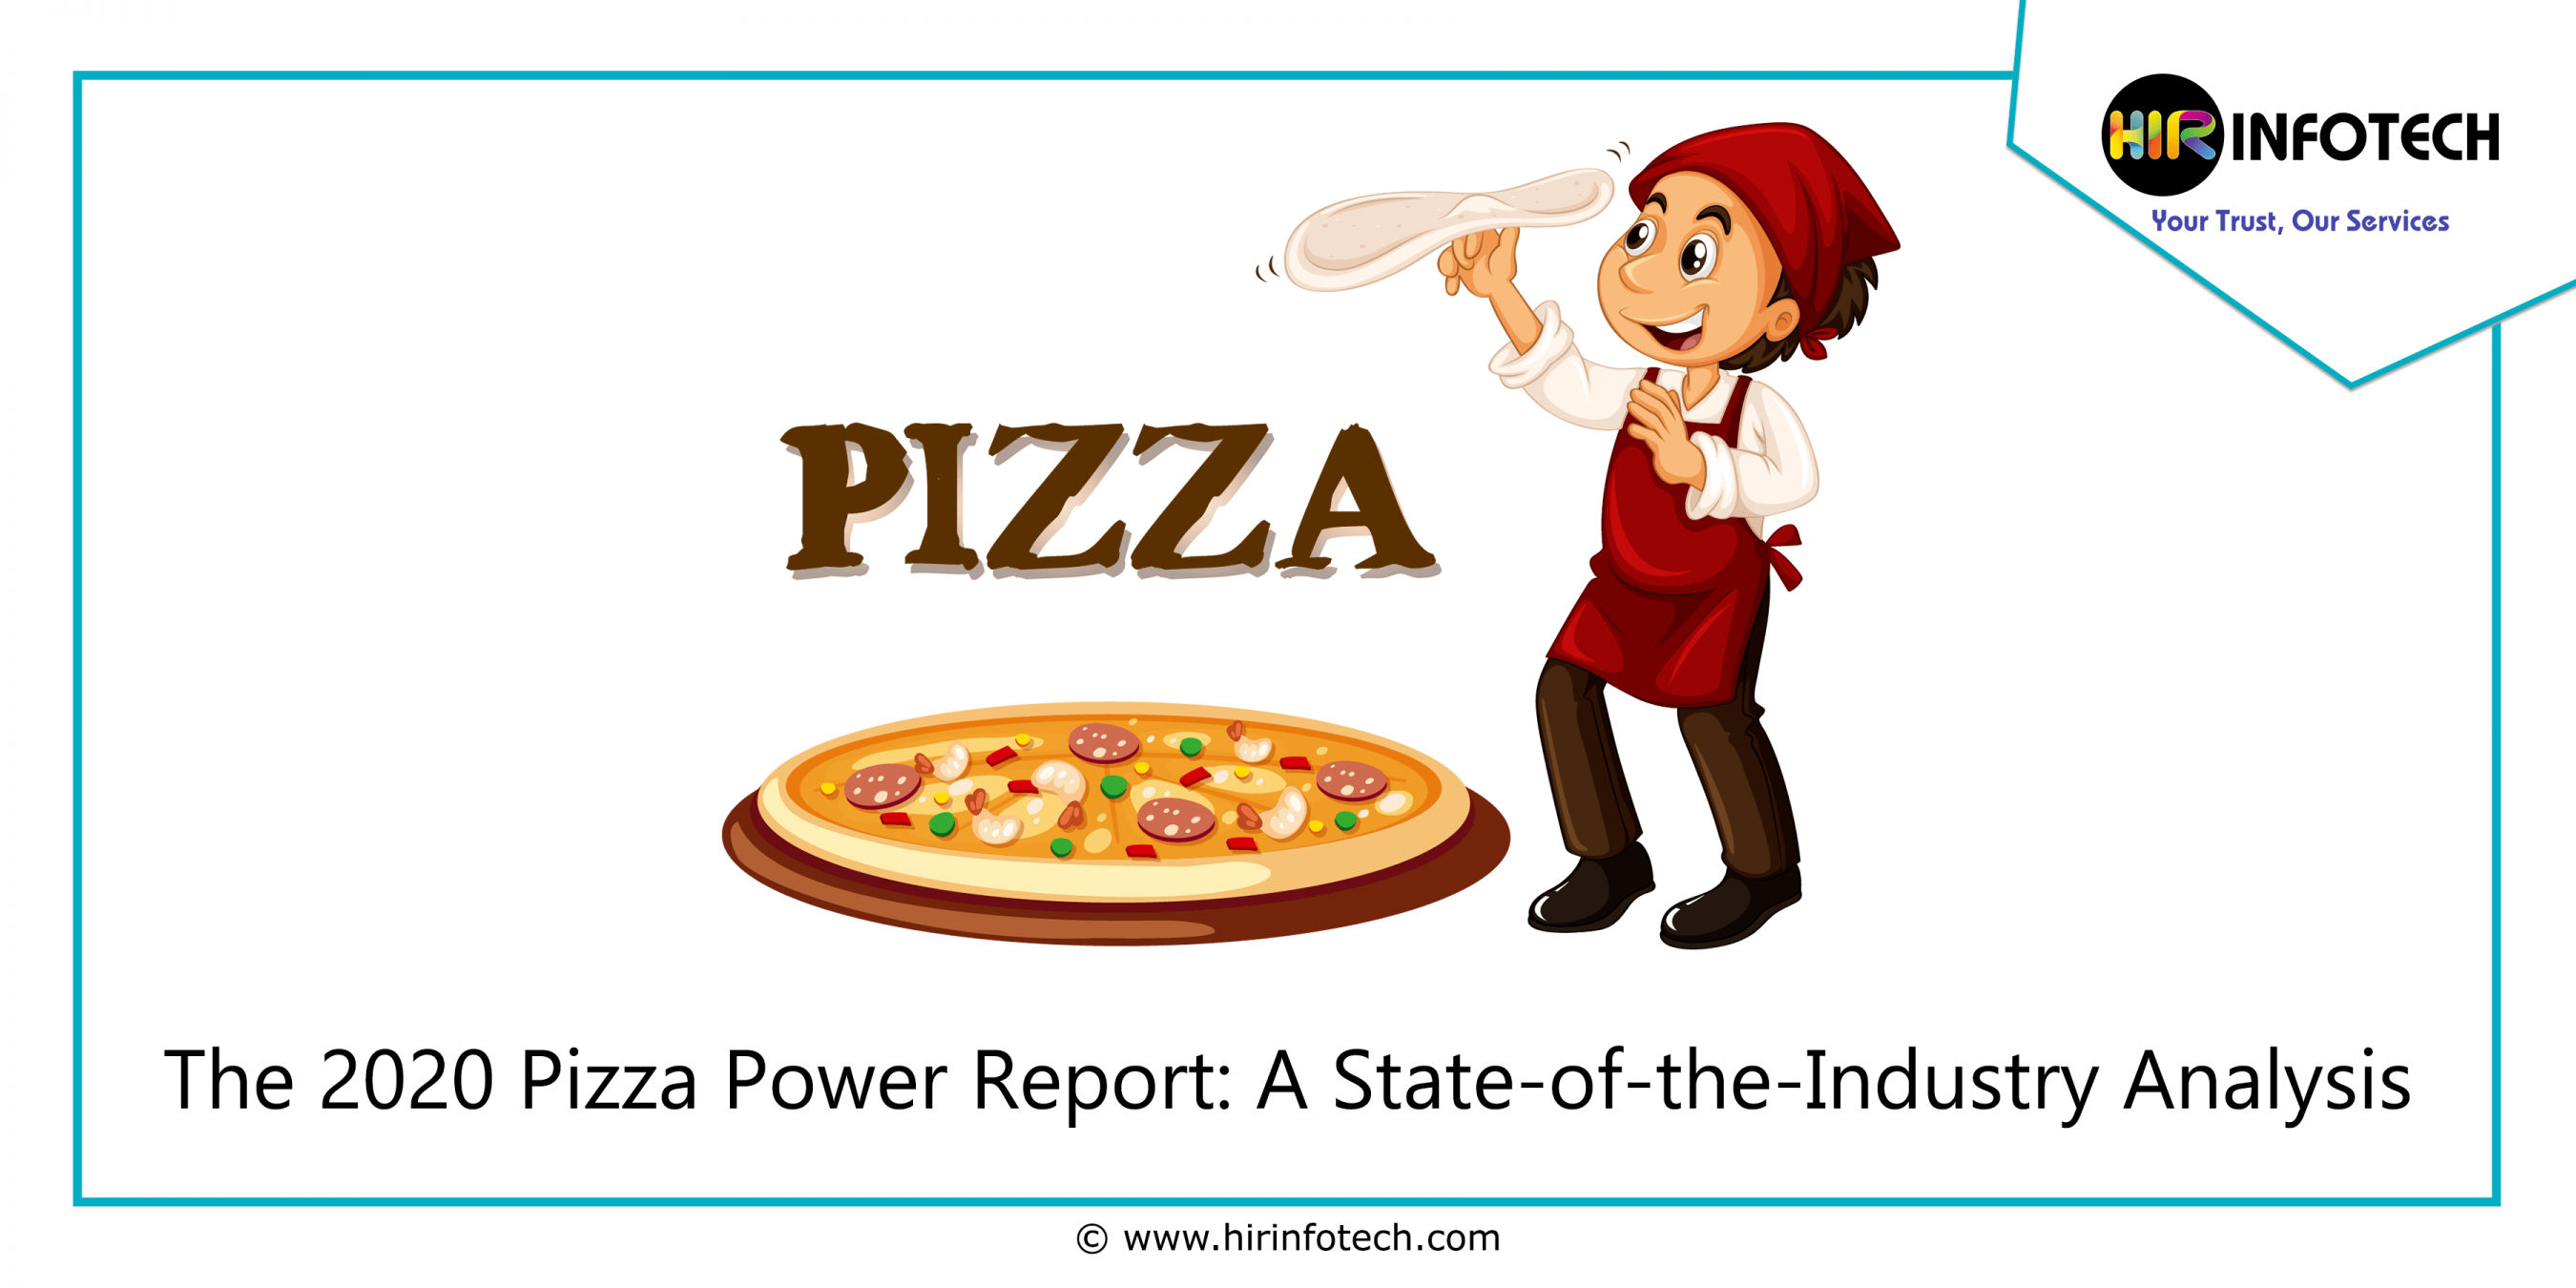 #Pizza #pizzahut #dominos #marketresearch #marketresearchreport #businessdevelopment #USA #BusinessGrowth #Technology #growth #foodmanufacturing #France #NewBlog